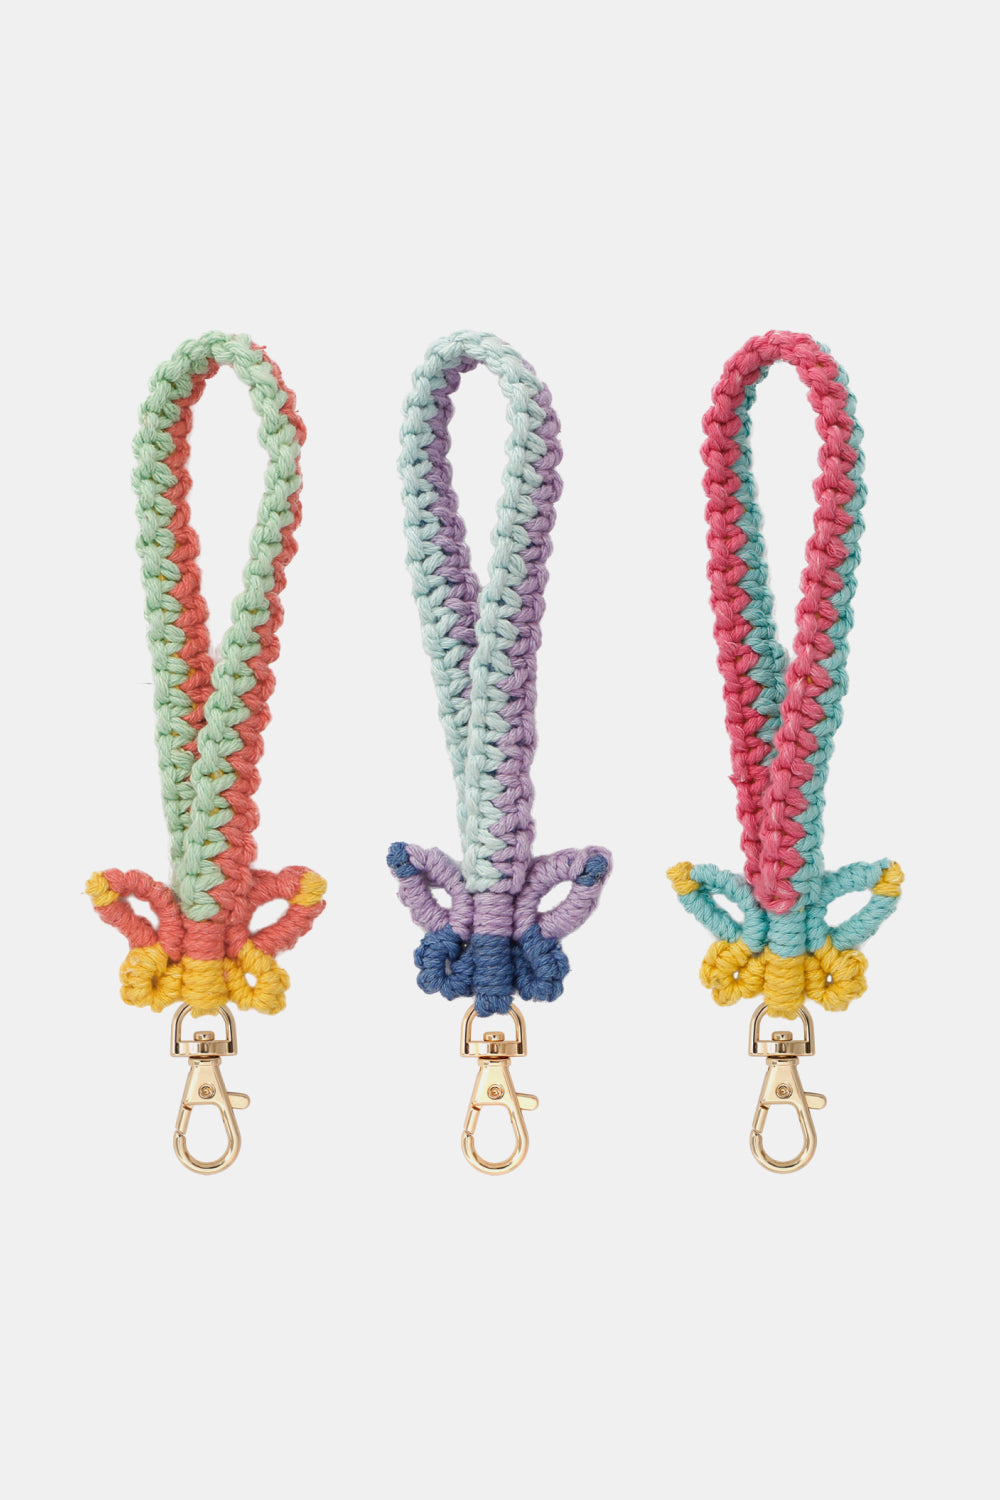 Trendsi Cupid Beauty Supplies Keychains Butterfly Shape Macrame Key Chain